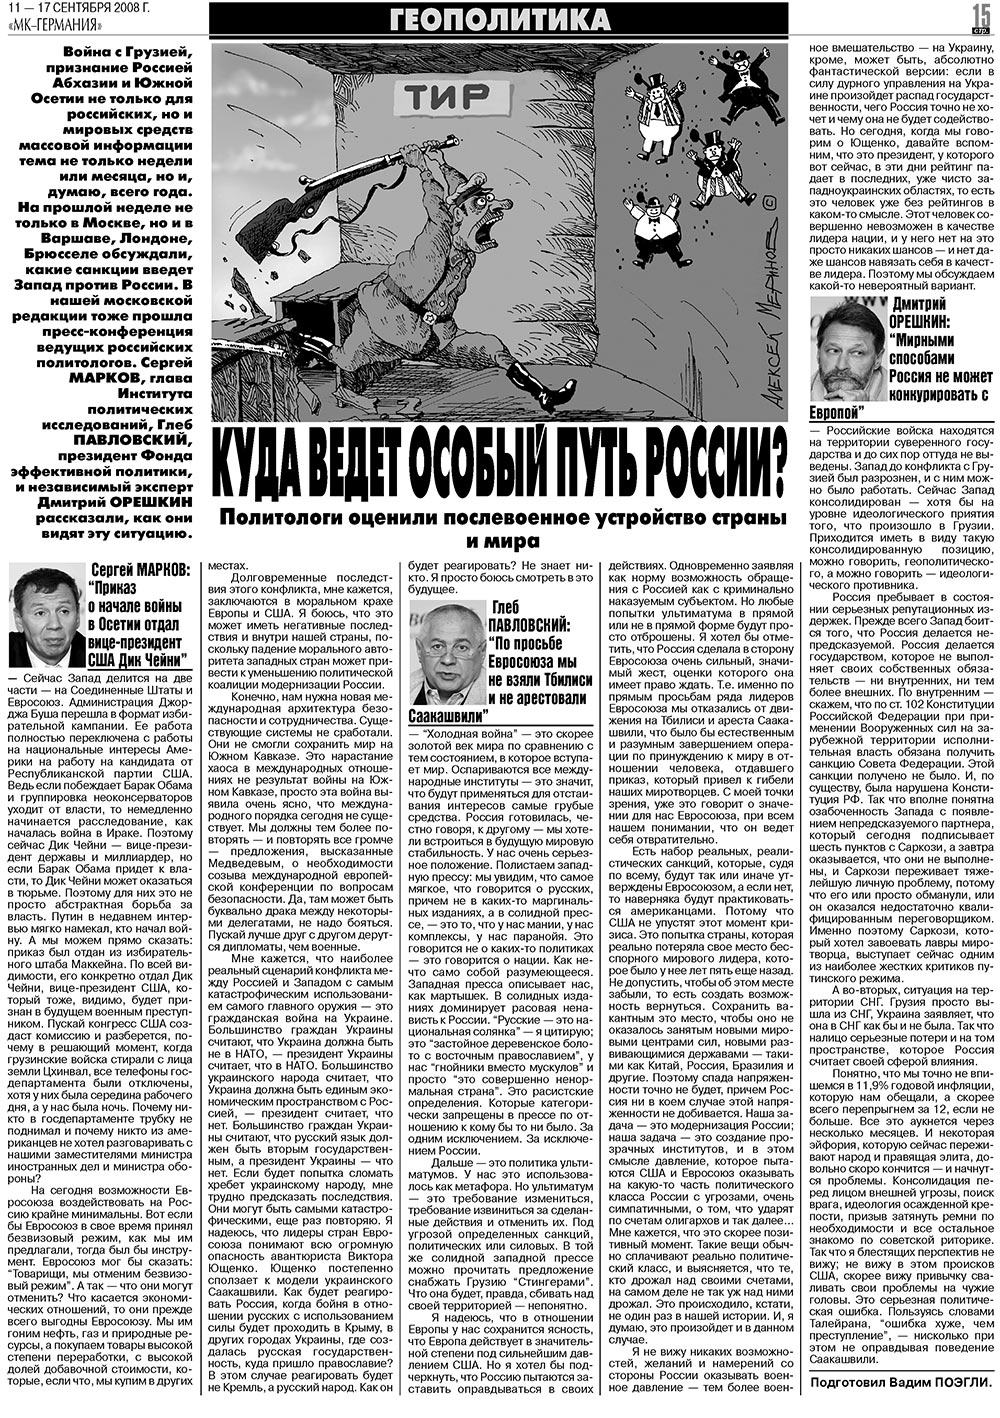 МК-Германия, газета. 2008 №37 стр.15